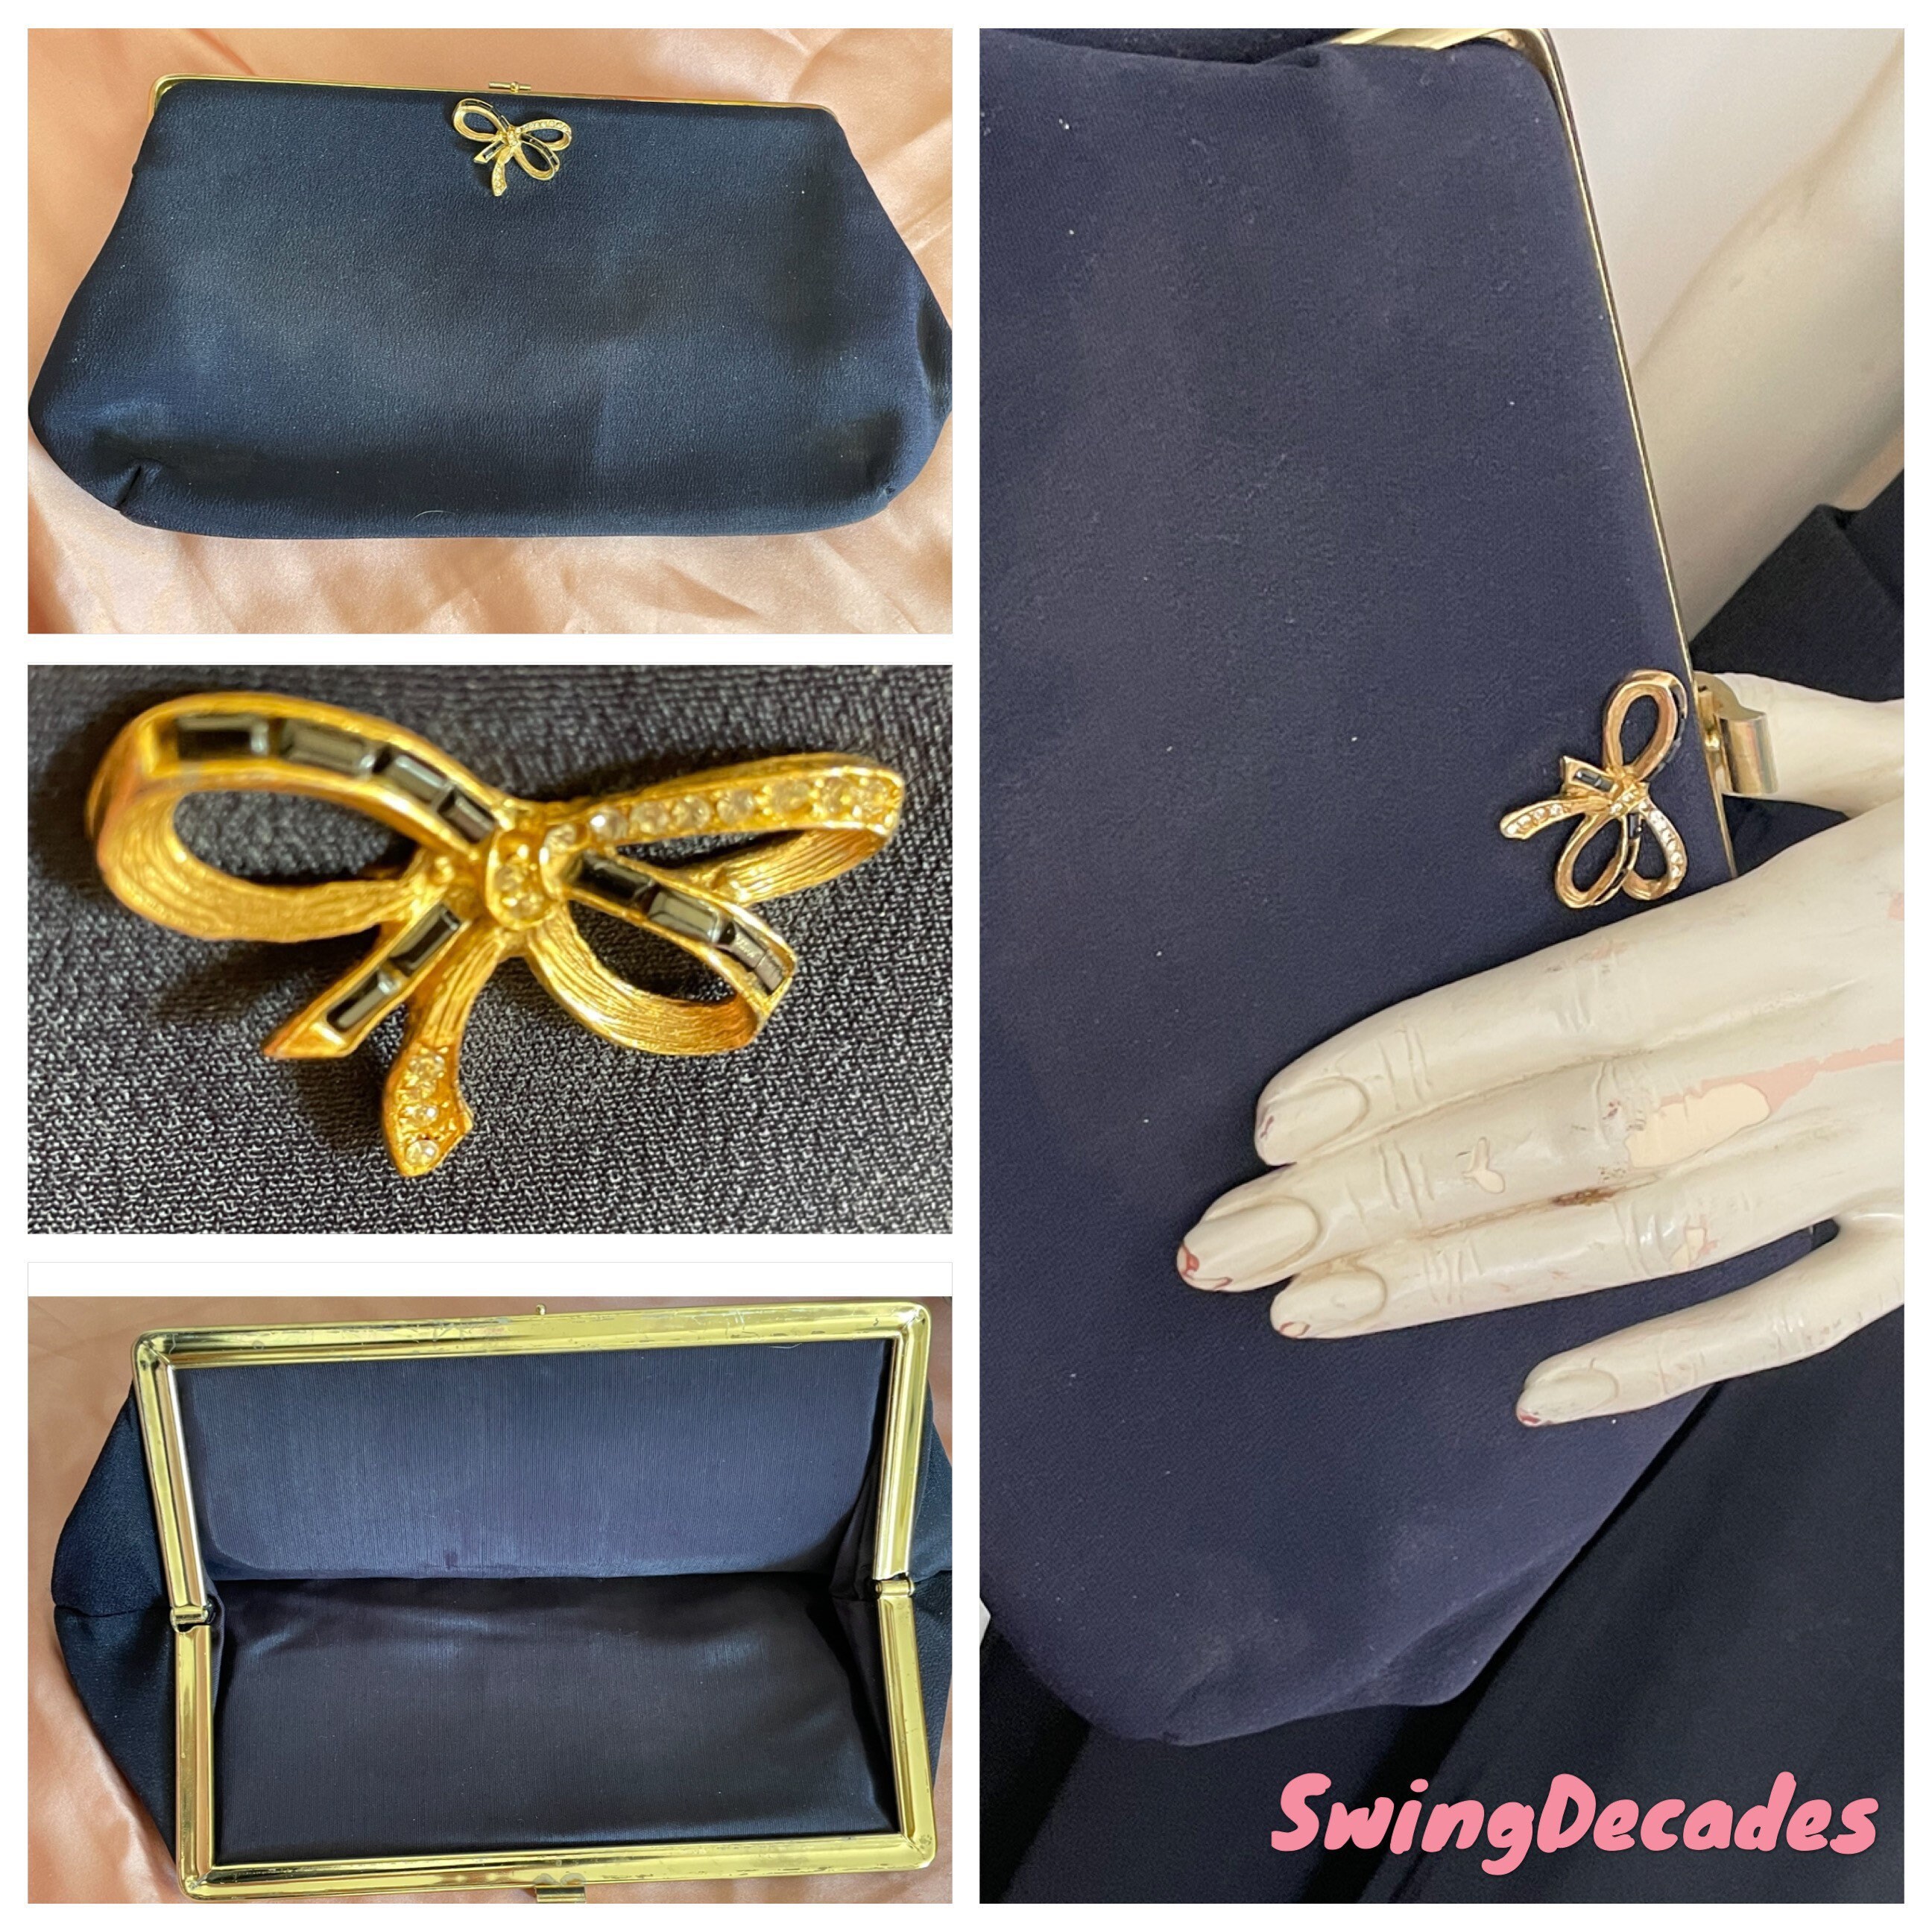 Vintage 50s 60s Ingber Bow Designer Purse Handbag W Coin Purse 